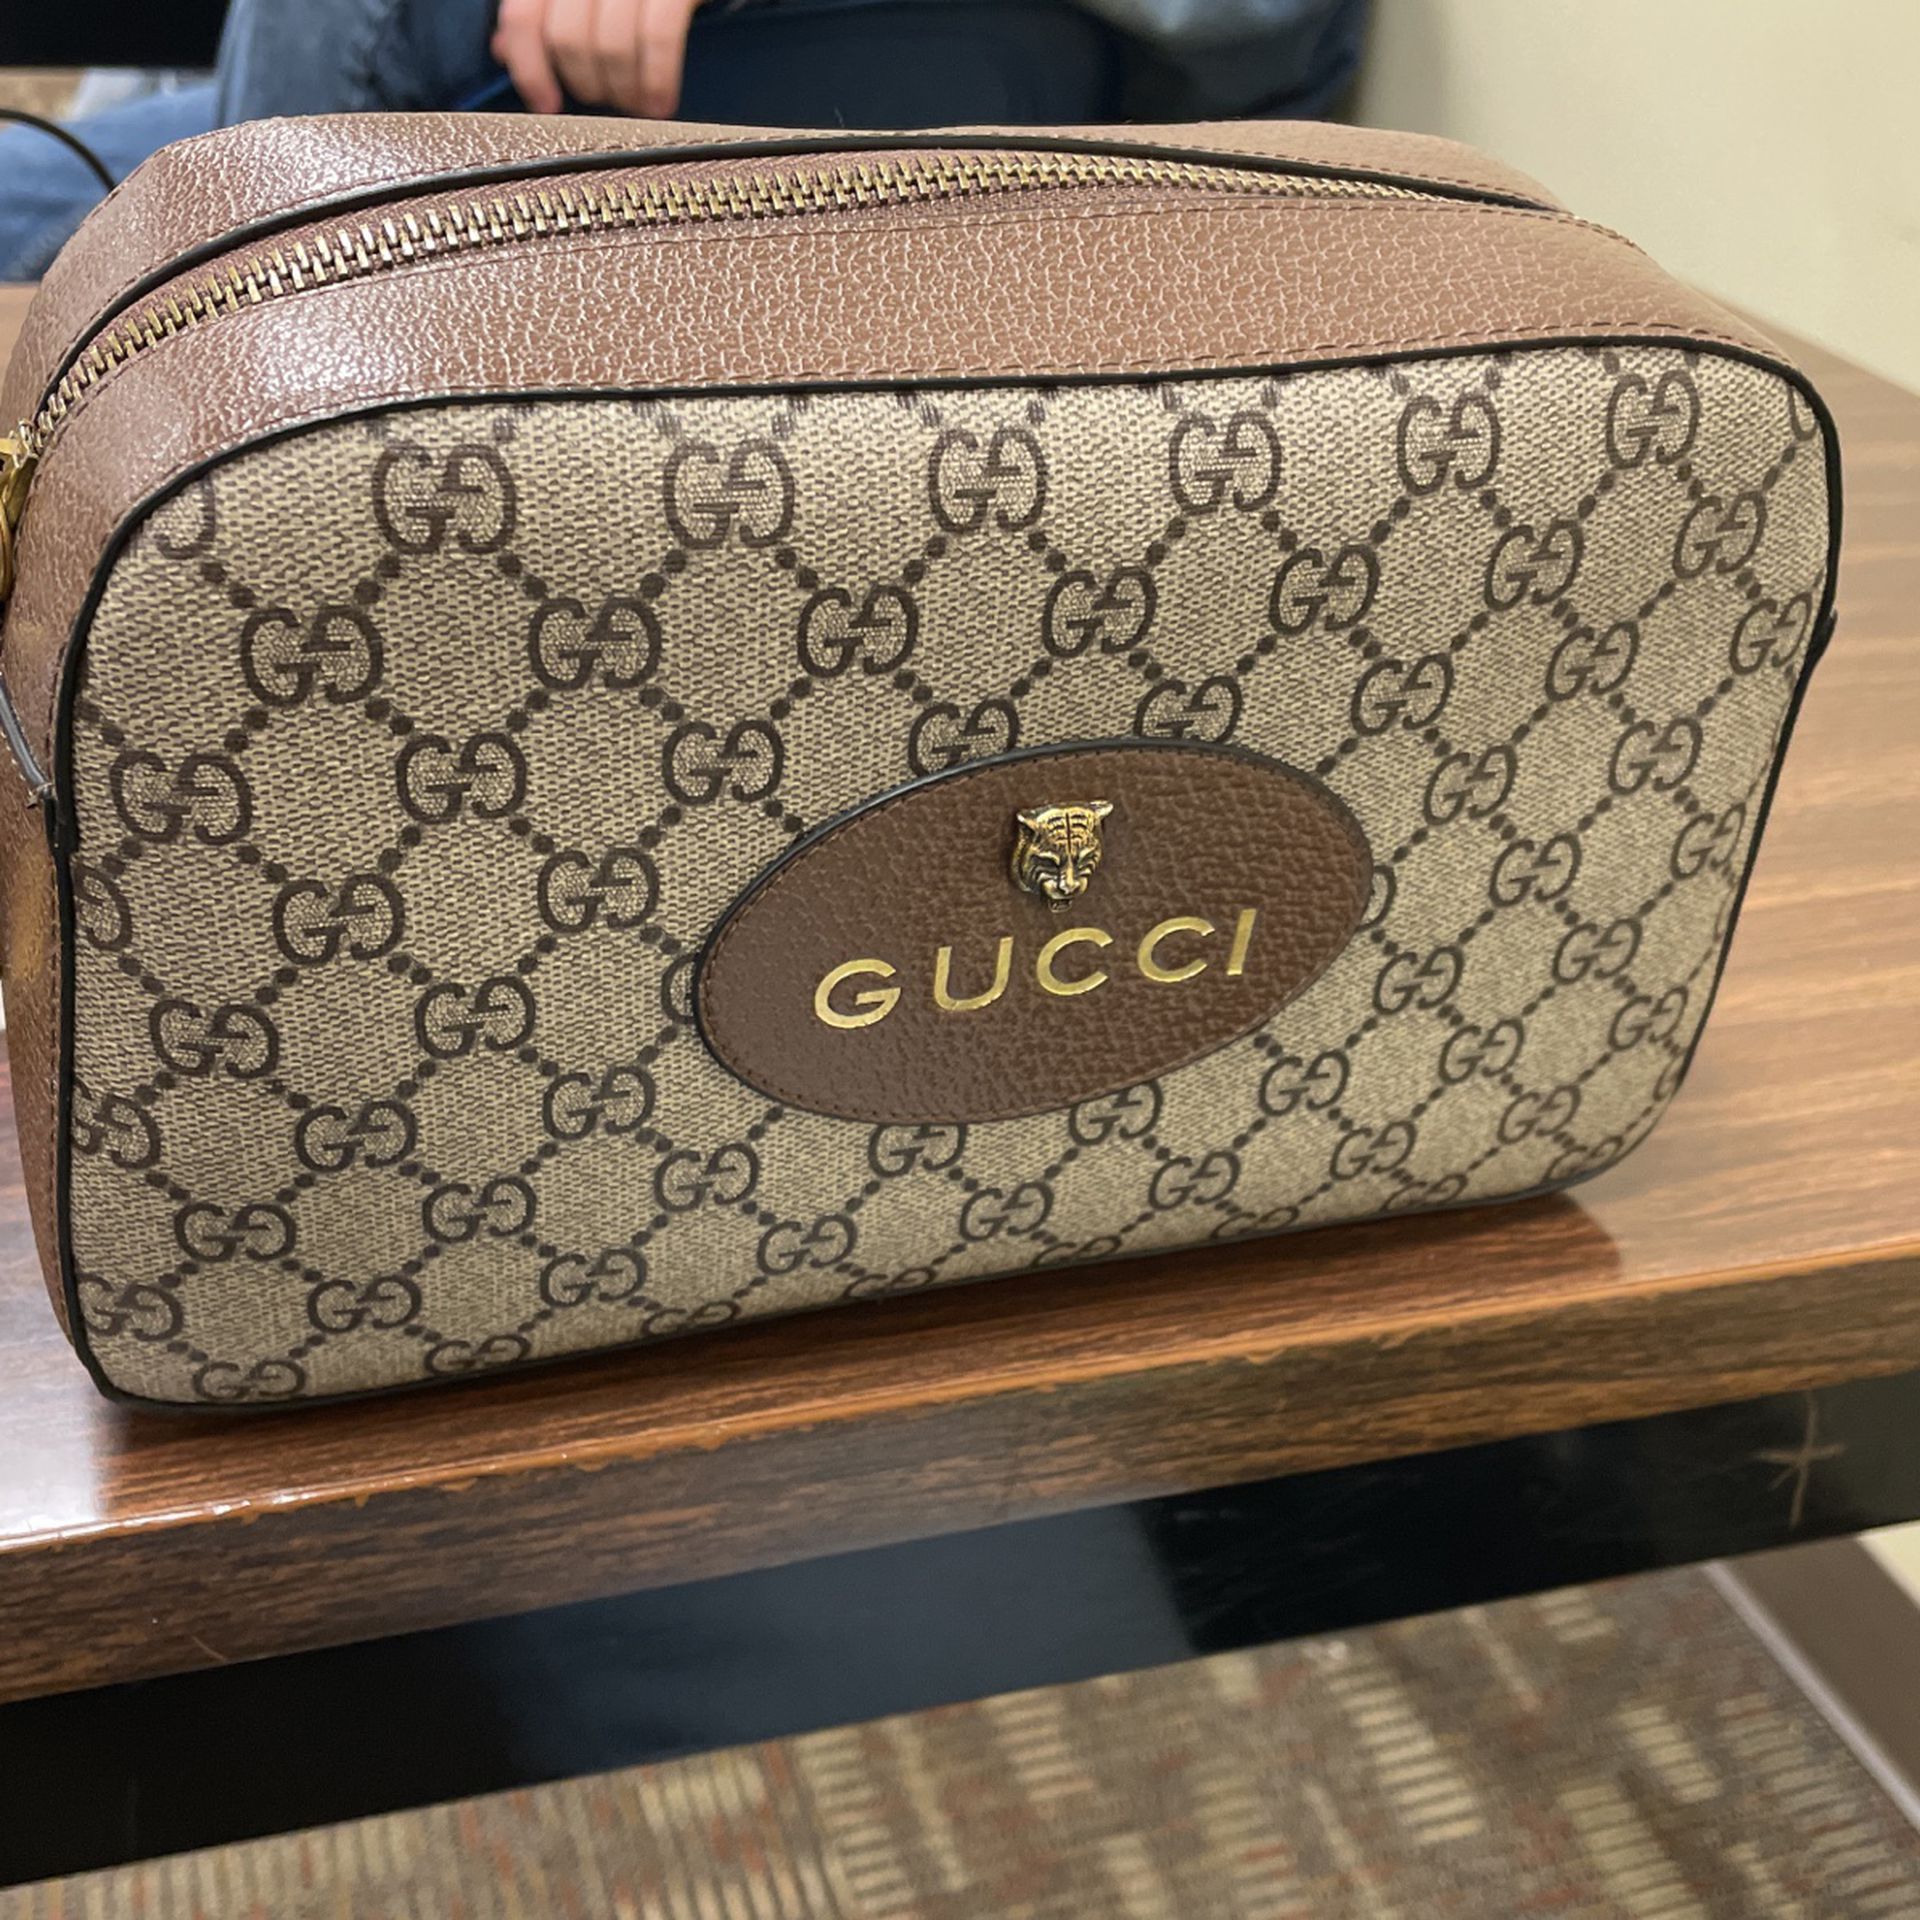 Sisters Old Gucci Bag Trade Or Cash/cash App